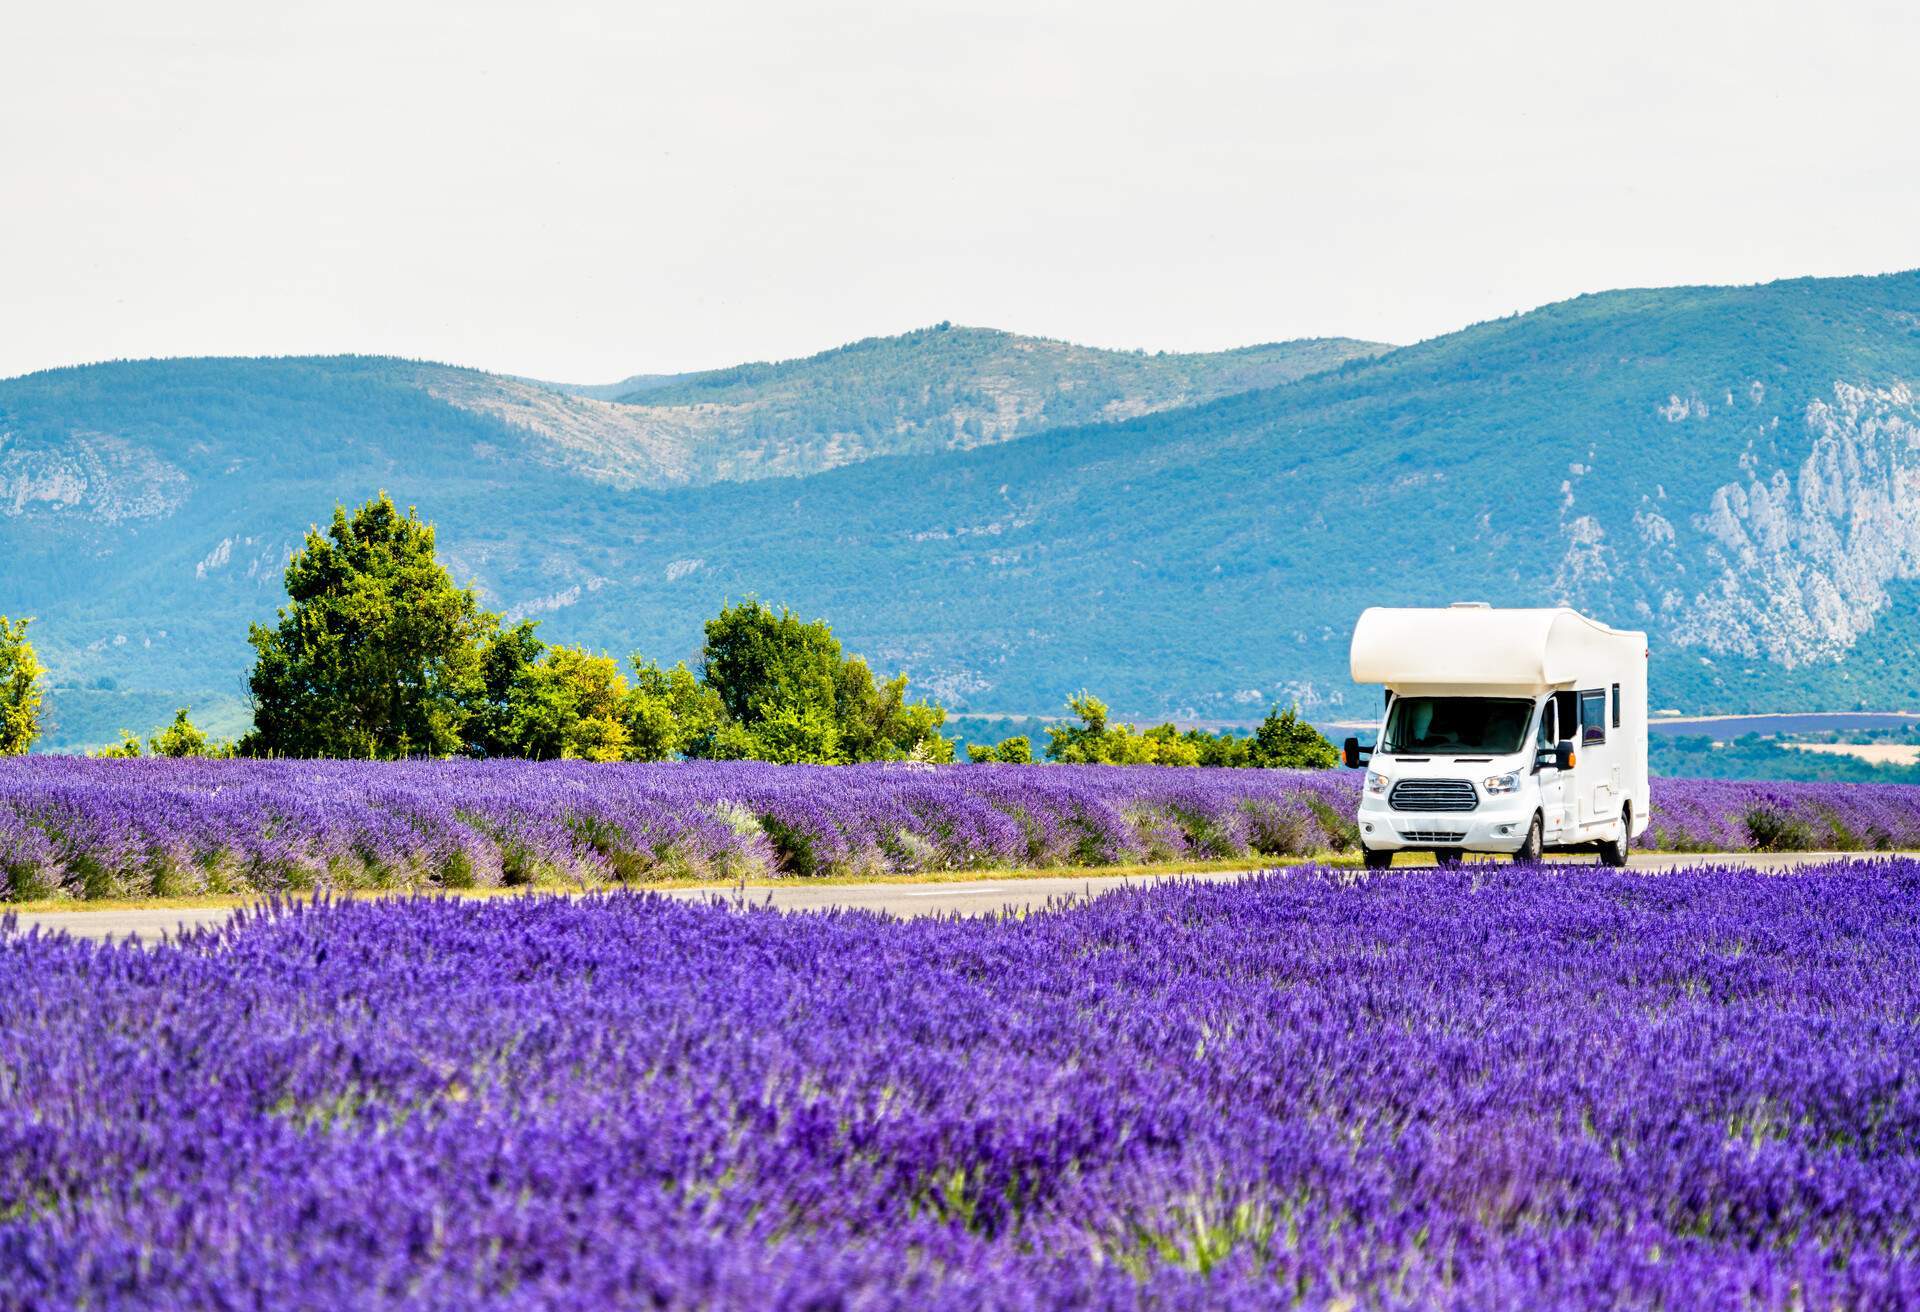 dest_france_provence_theme_camper_van_rv_roadtrip_travel_lavendar-flowers-shutterstock-portfolio_1212213253_universal_within-usage-period_80762